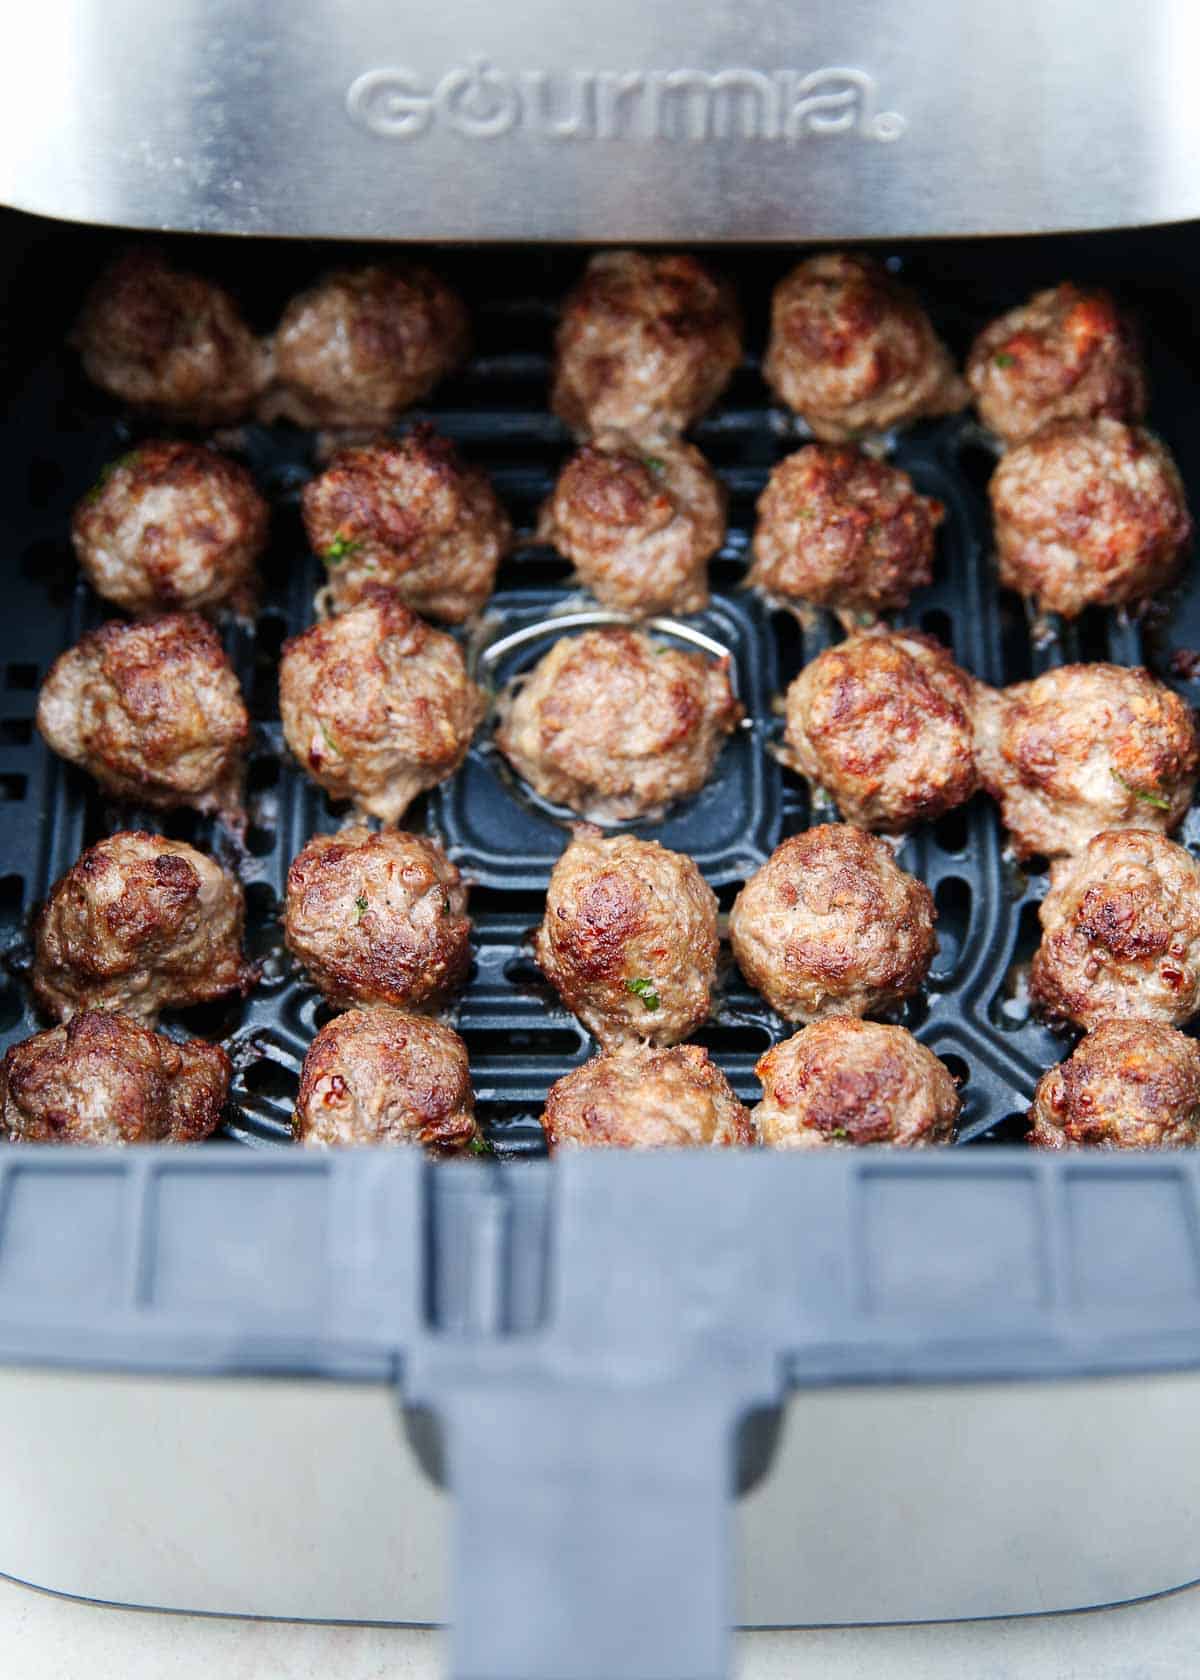 Meatballs in the air fryer basket.